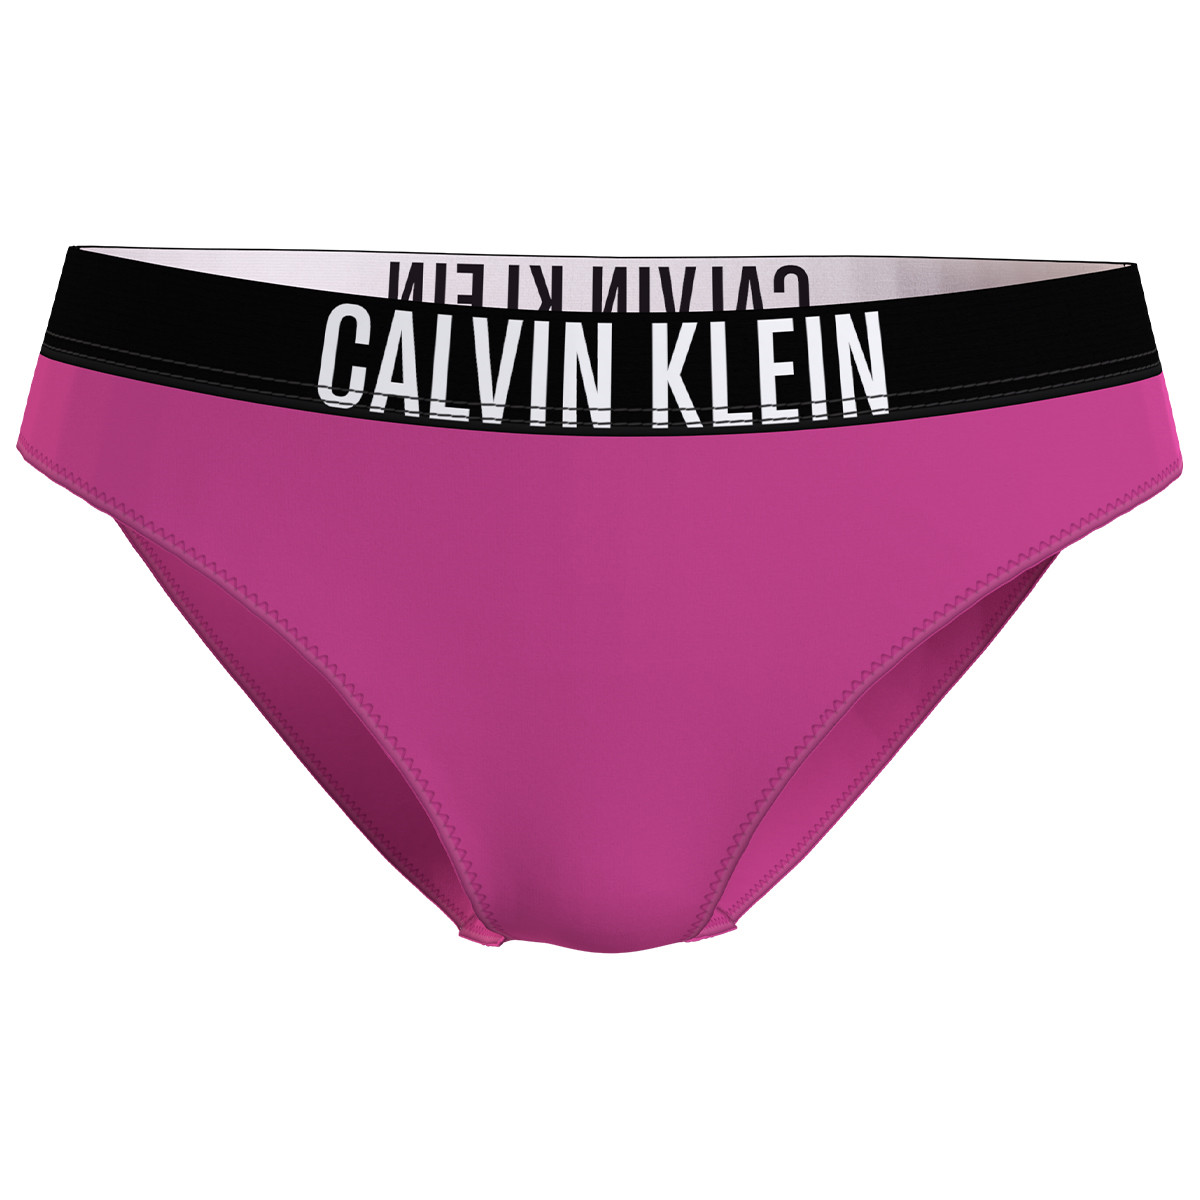 Calvin Klein Bikini Tai W To, Farve: Stunning Orchid, Størrelse: M, Dame